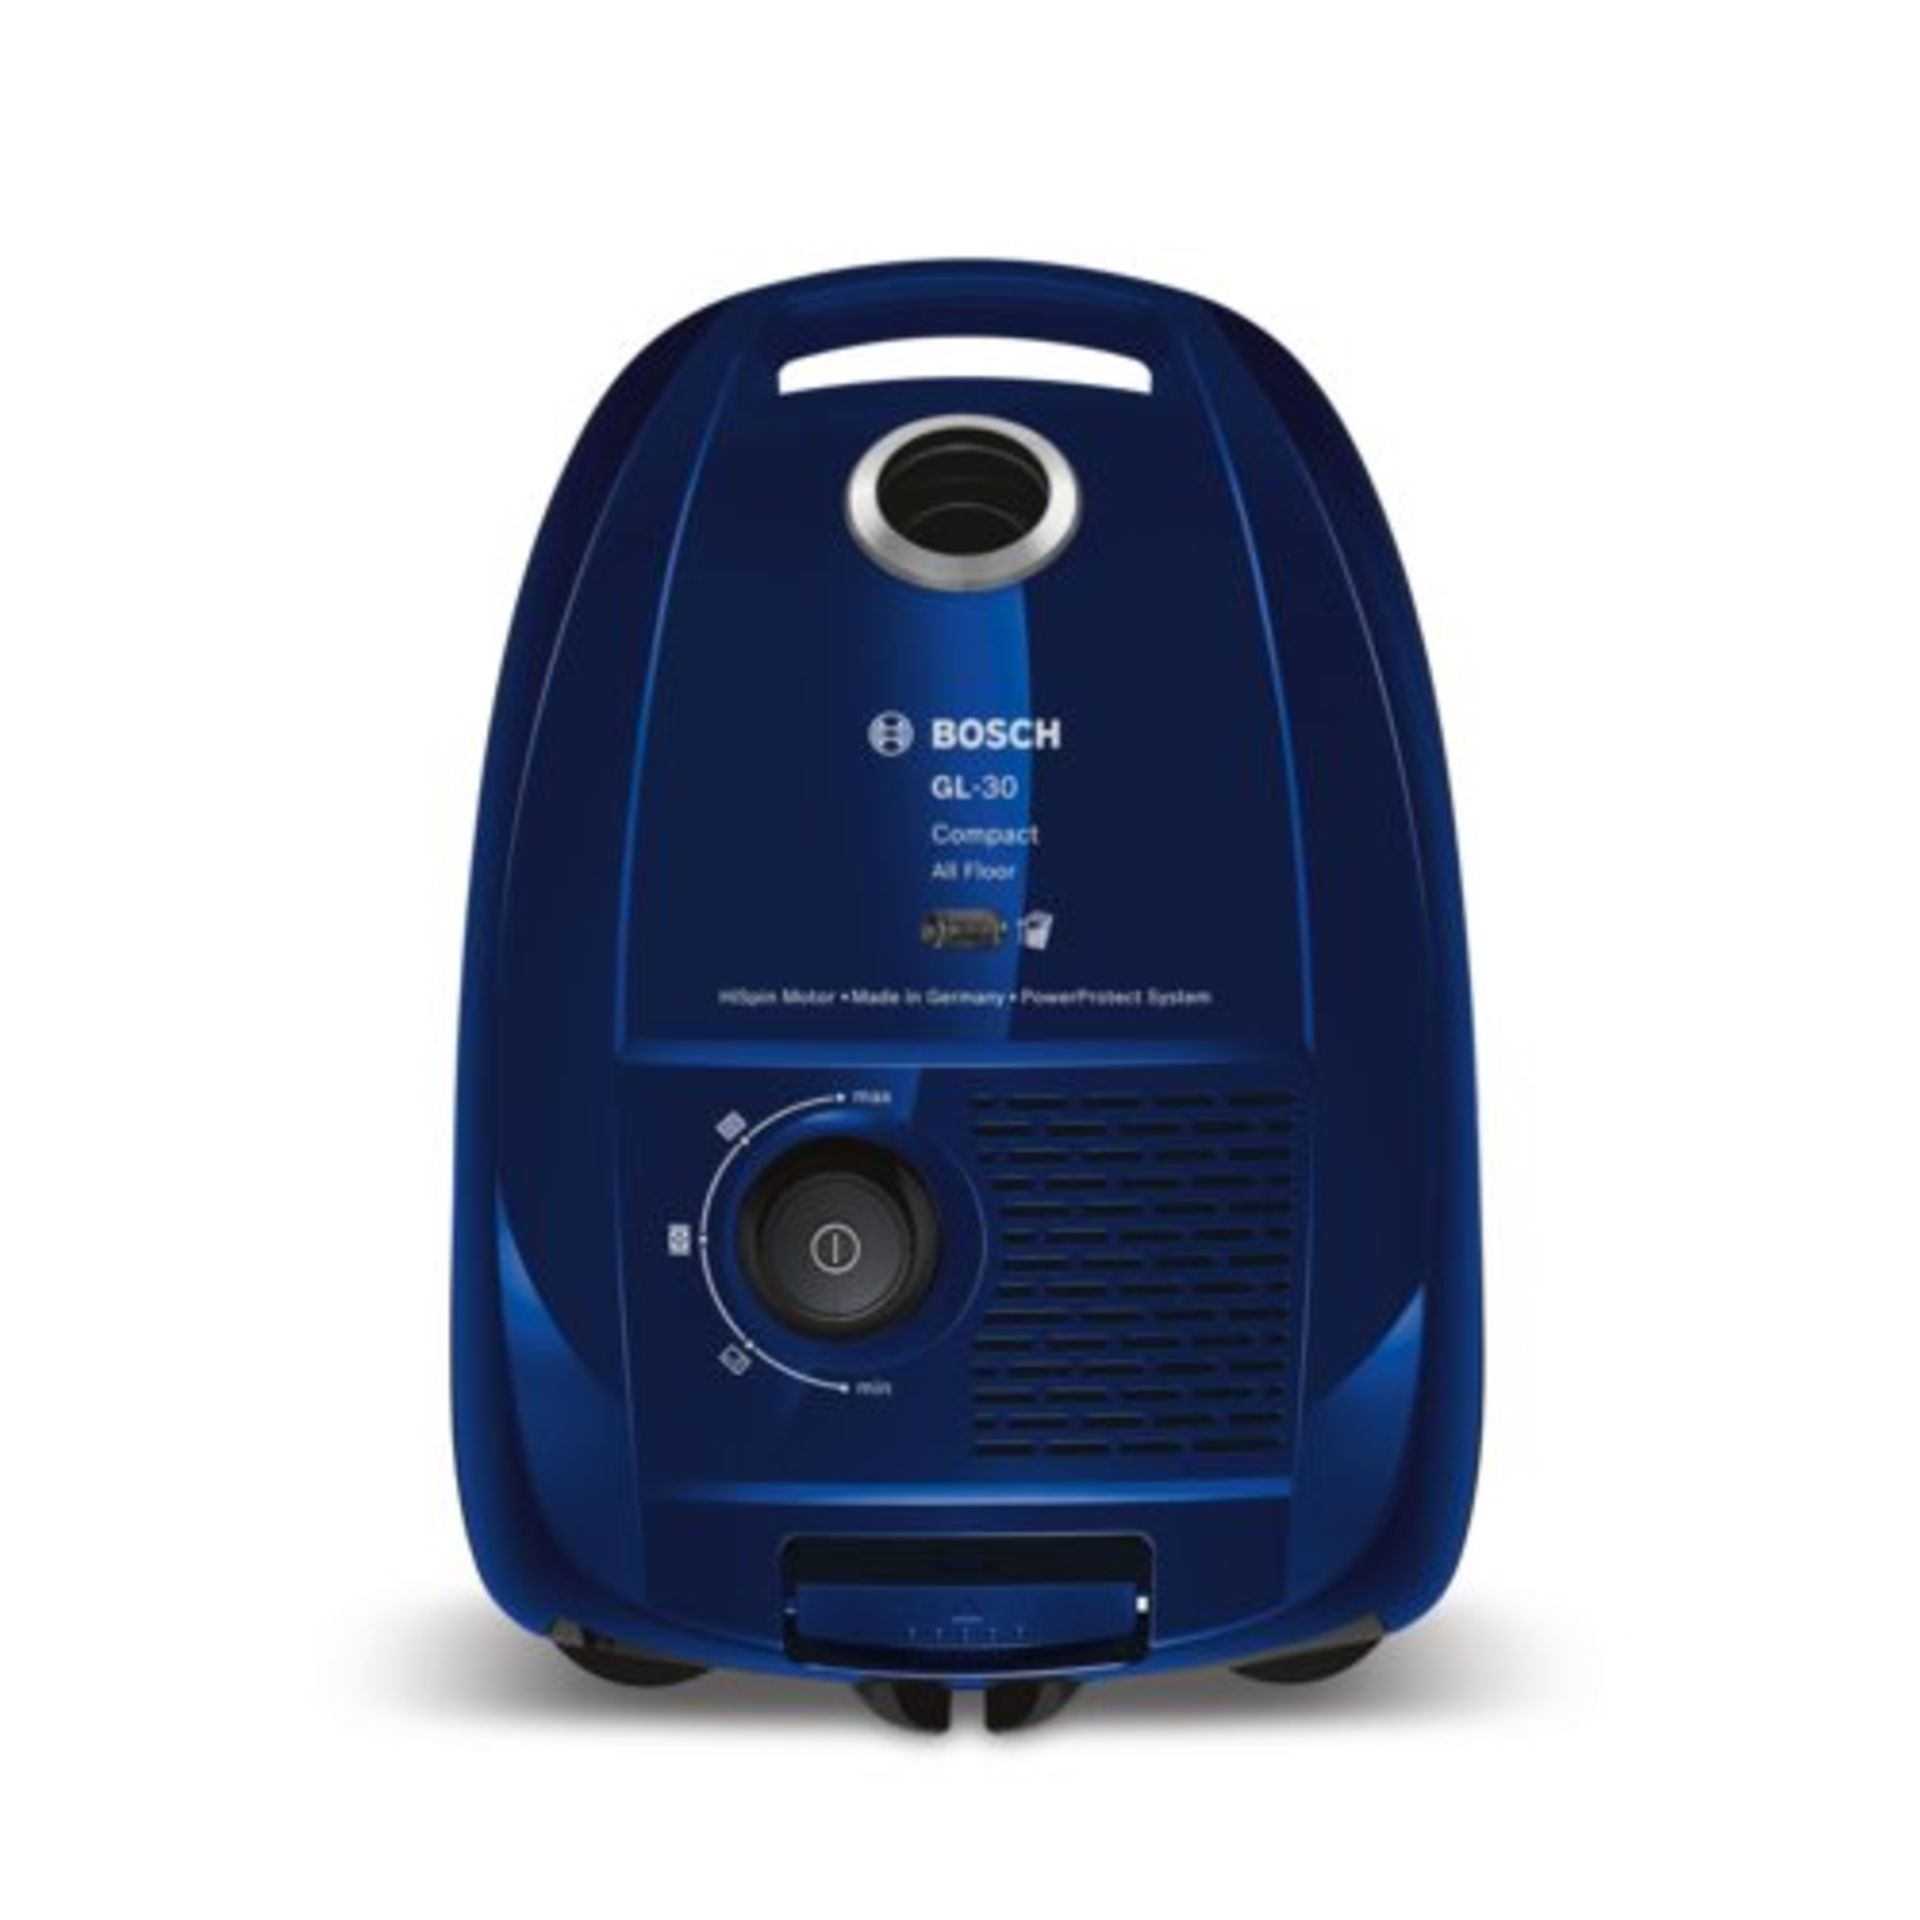 V Brand New Bosch GL-30 Hygenic Vacuum Cleaner 4l Capacity RRP£152.99 Amazon Price £102.99 X 2